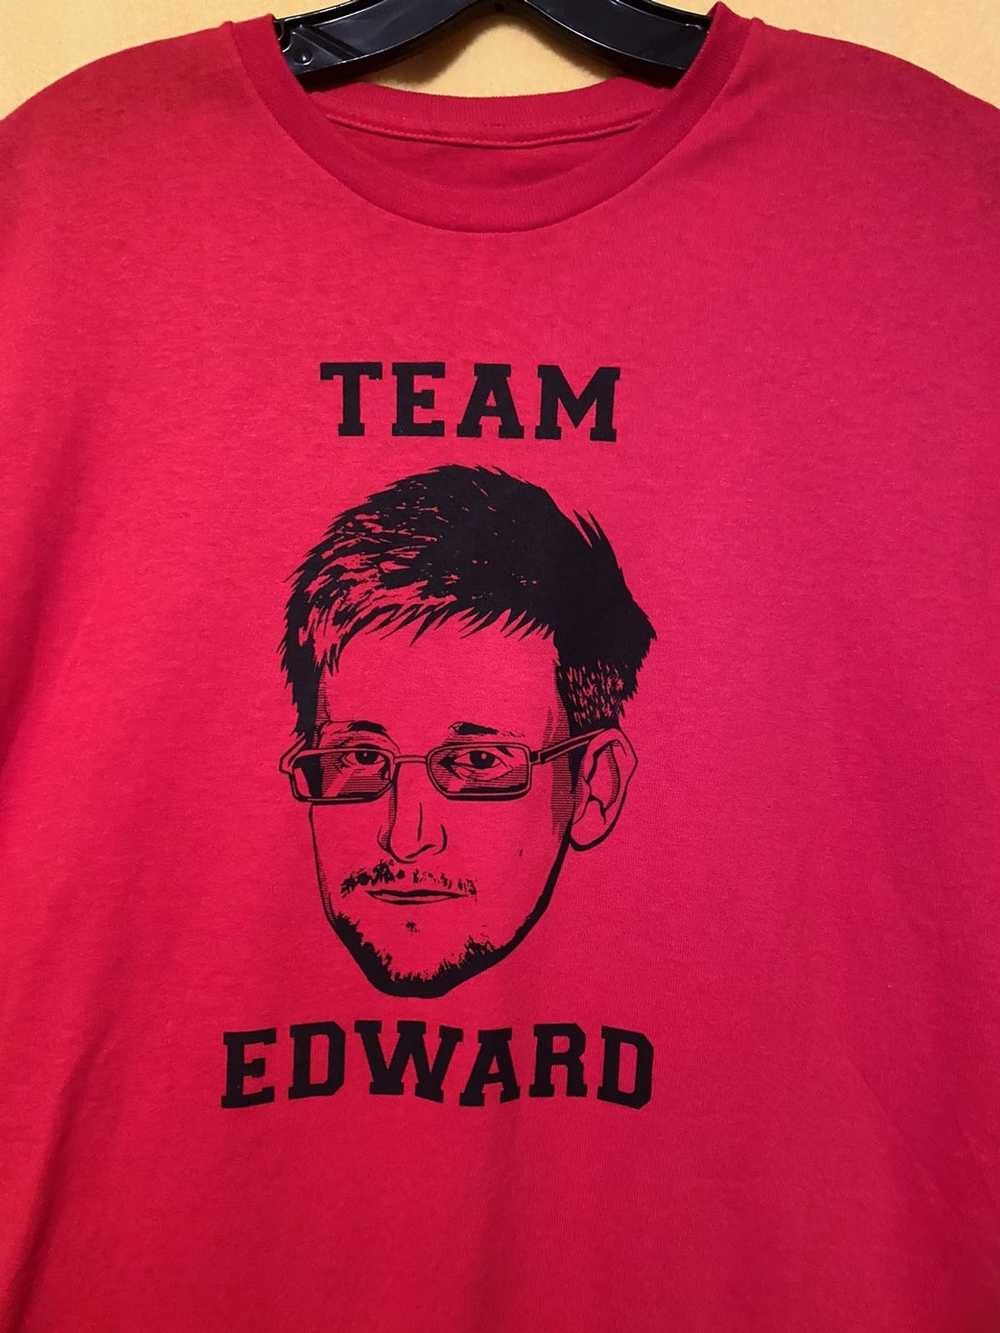 Vintage Edward Snowden Tee - image 2